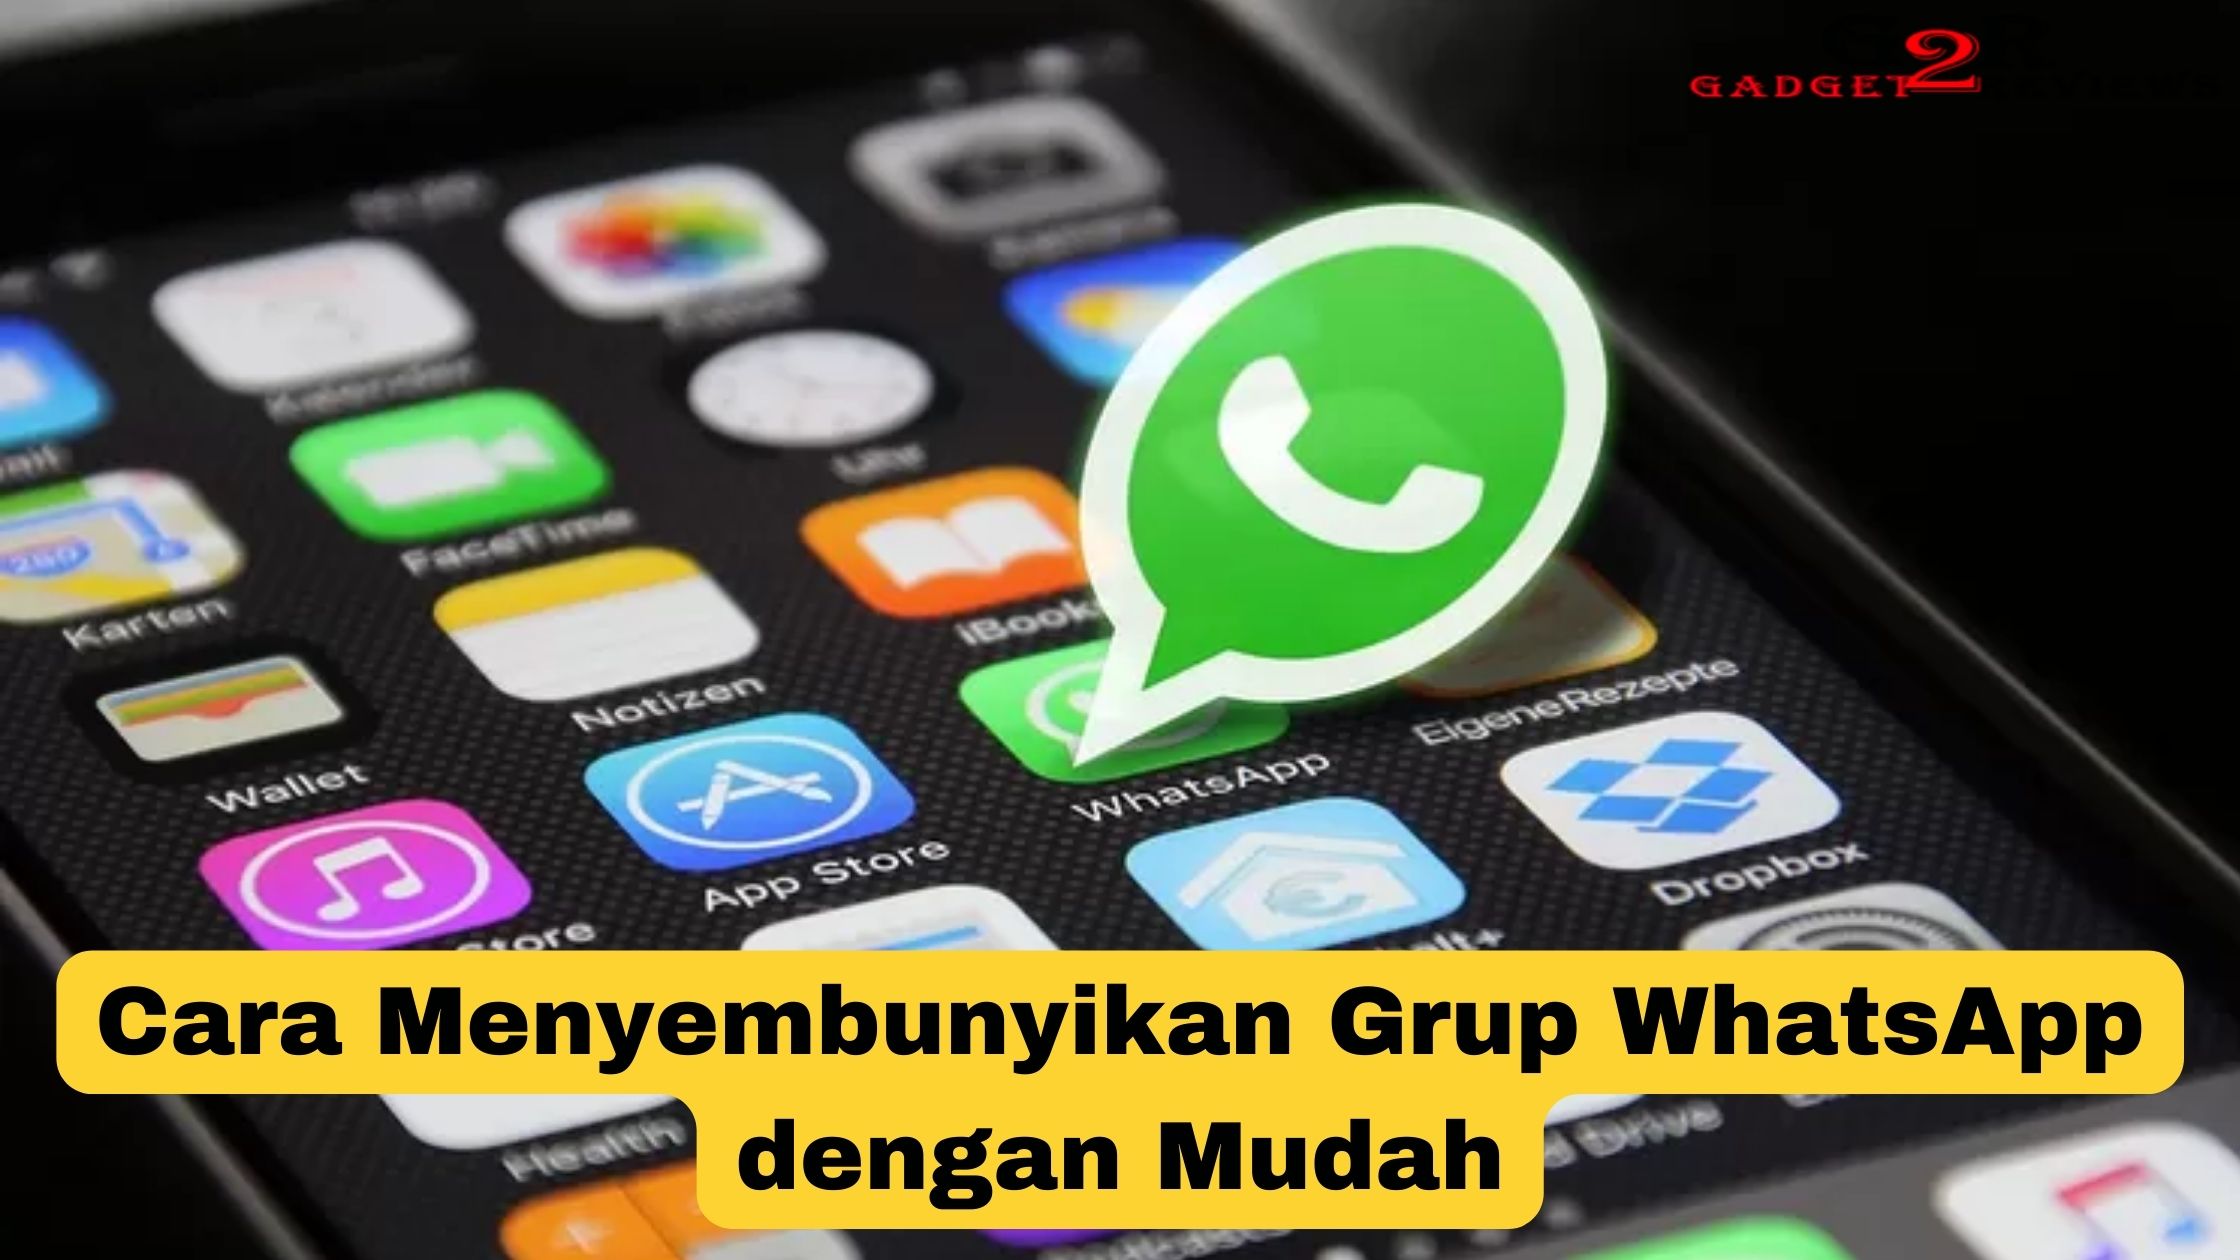 Cara Menyembunyikan Grup WhatsApp